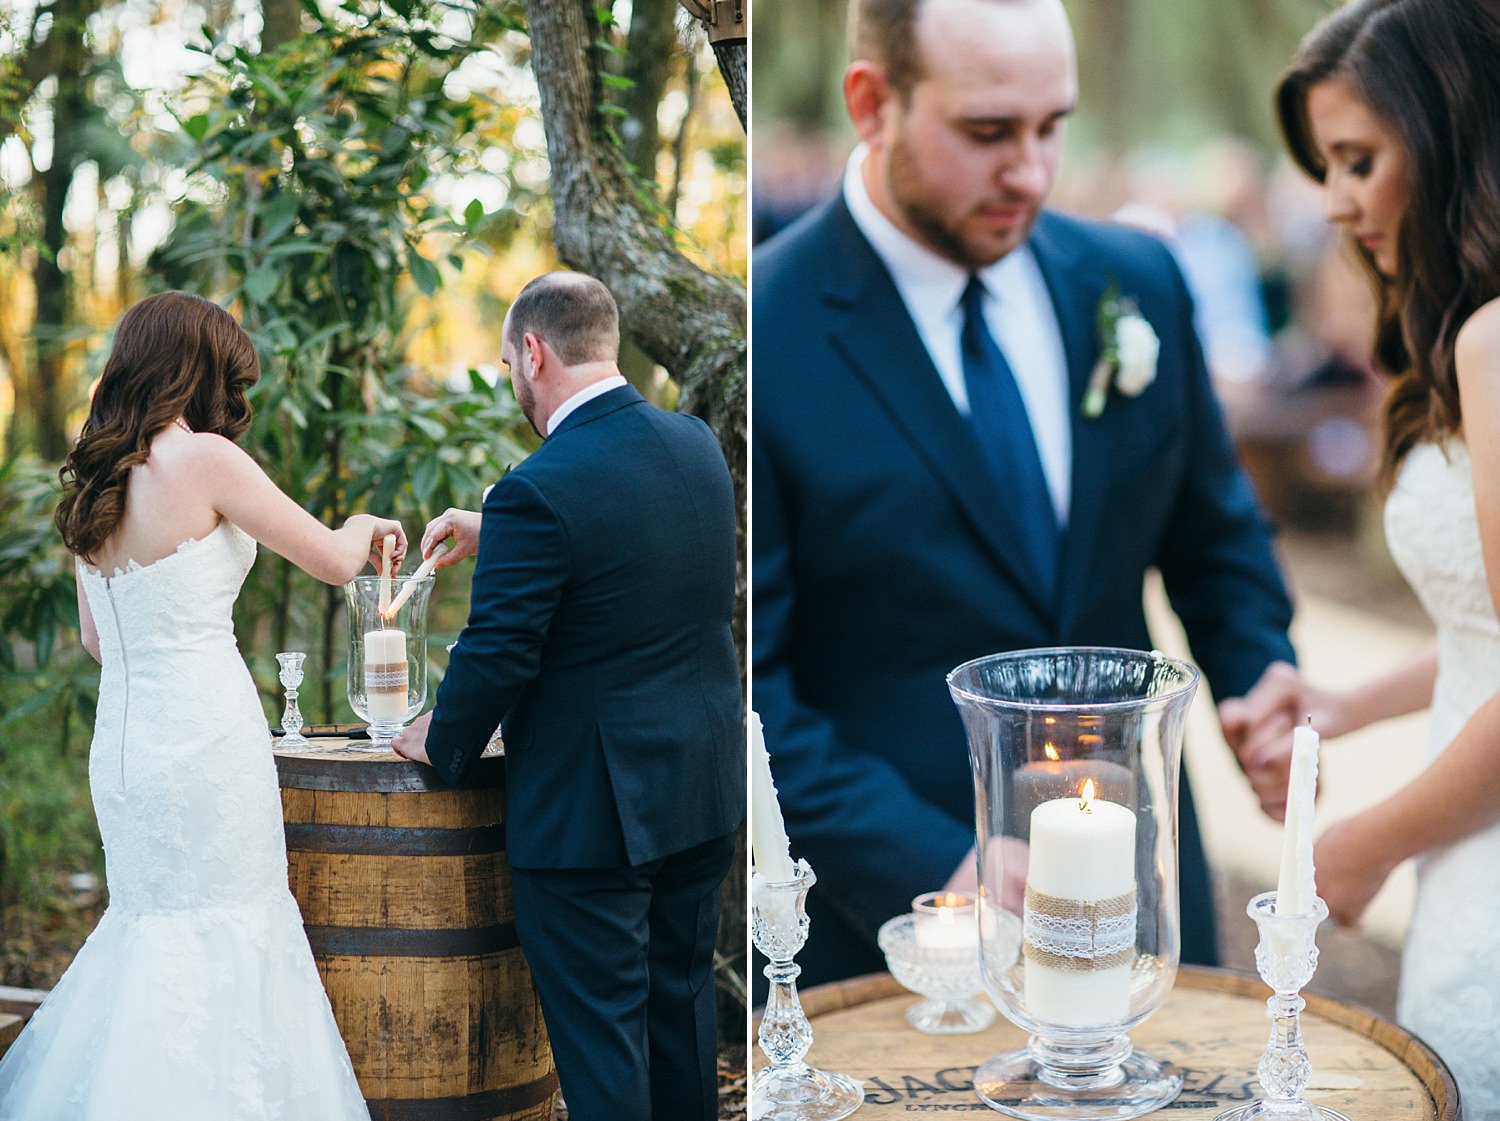 Gables Ceremony | Florida Rustic Barn Weddings | Plant City, Florida Wedding Photography | Benjamin Hewitt Photographer